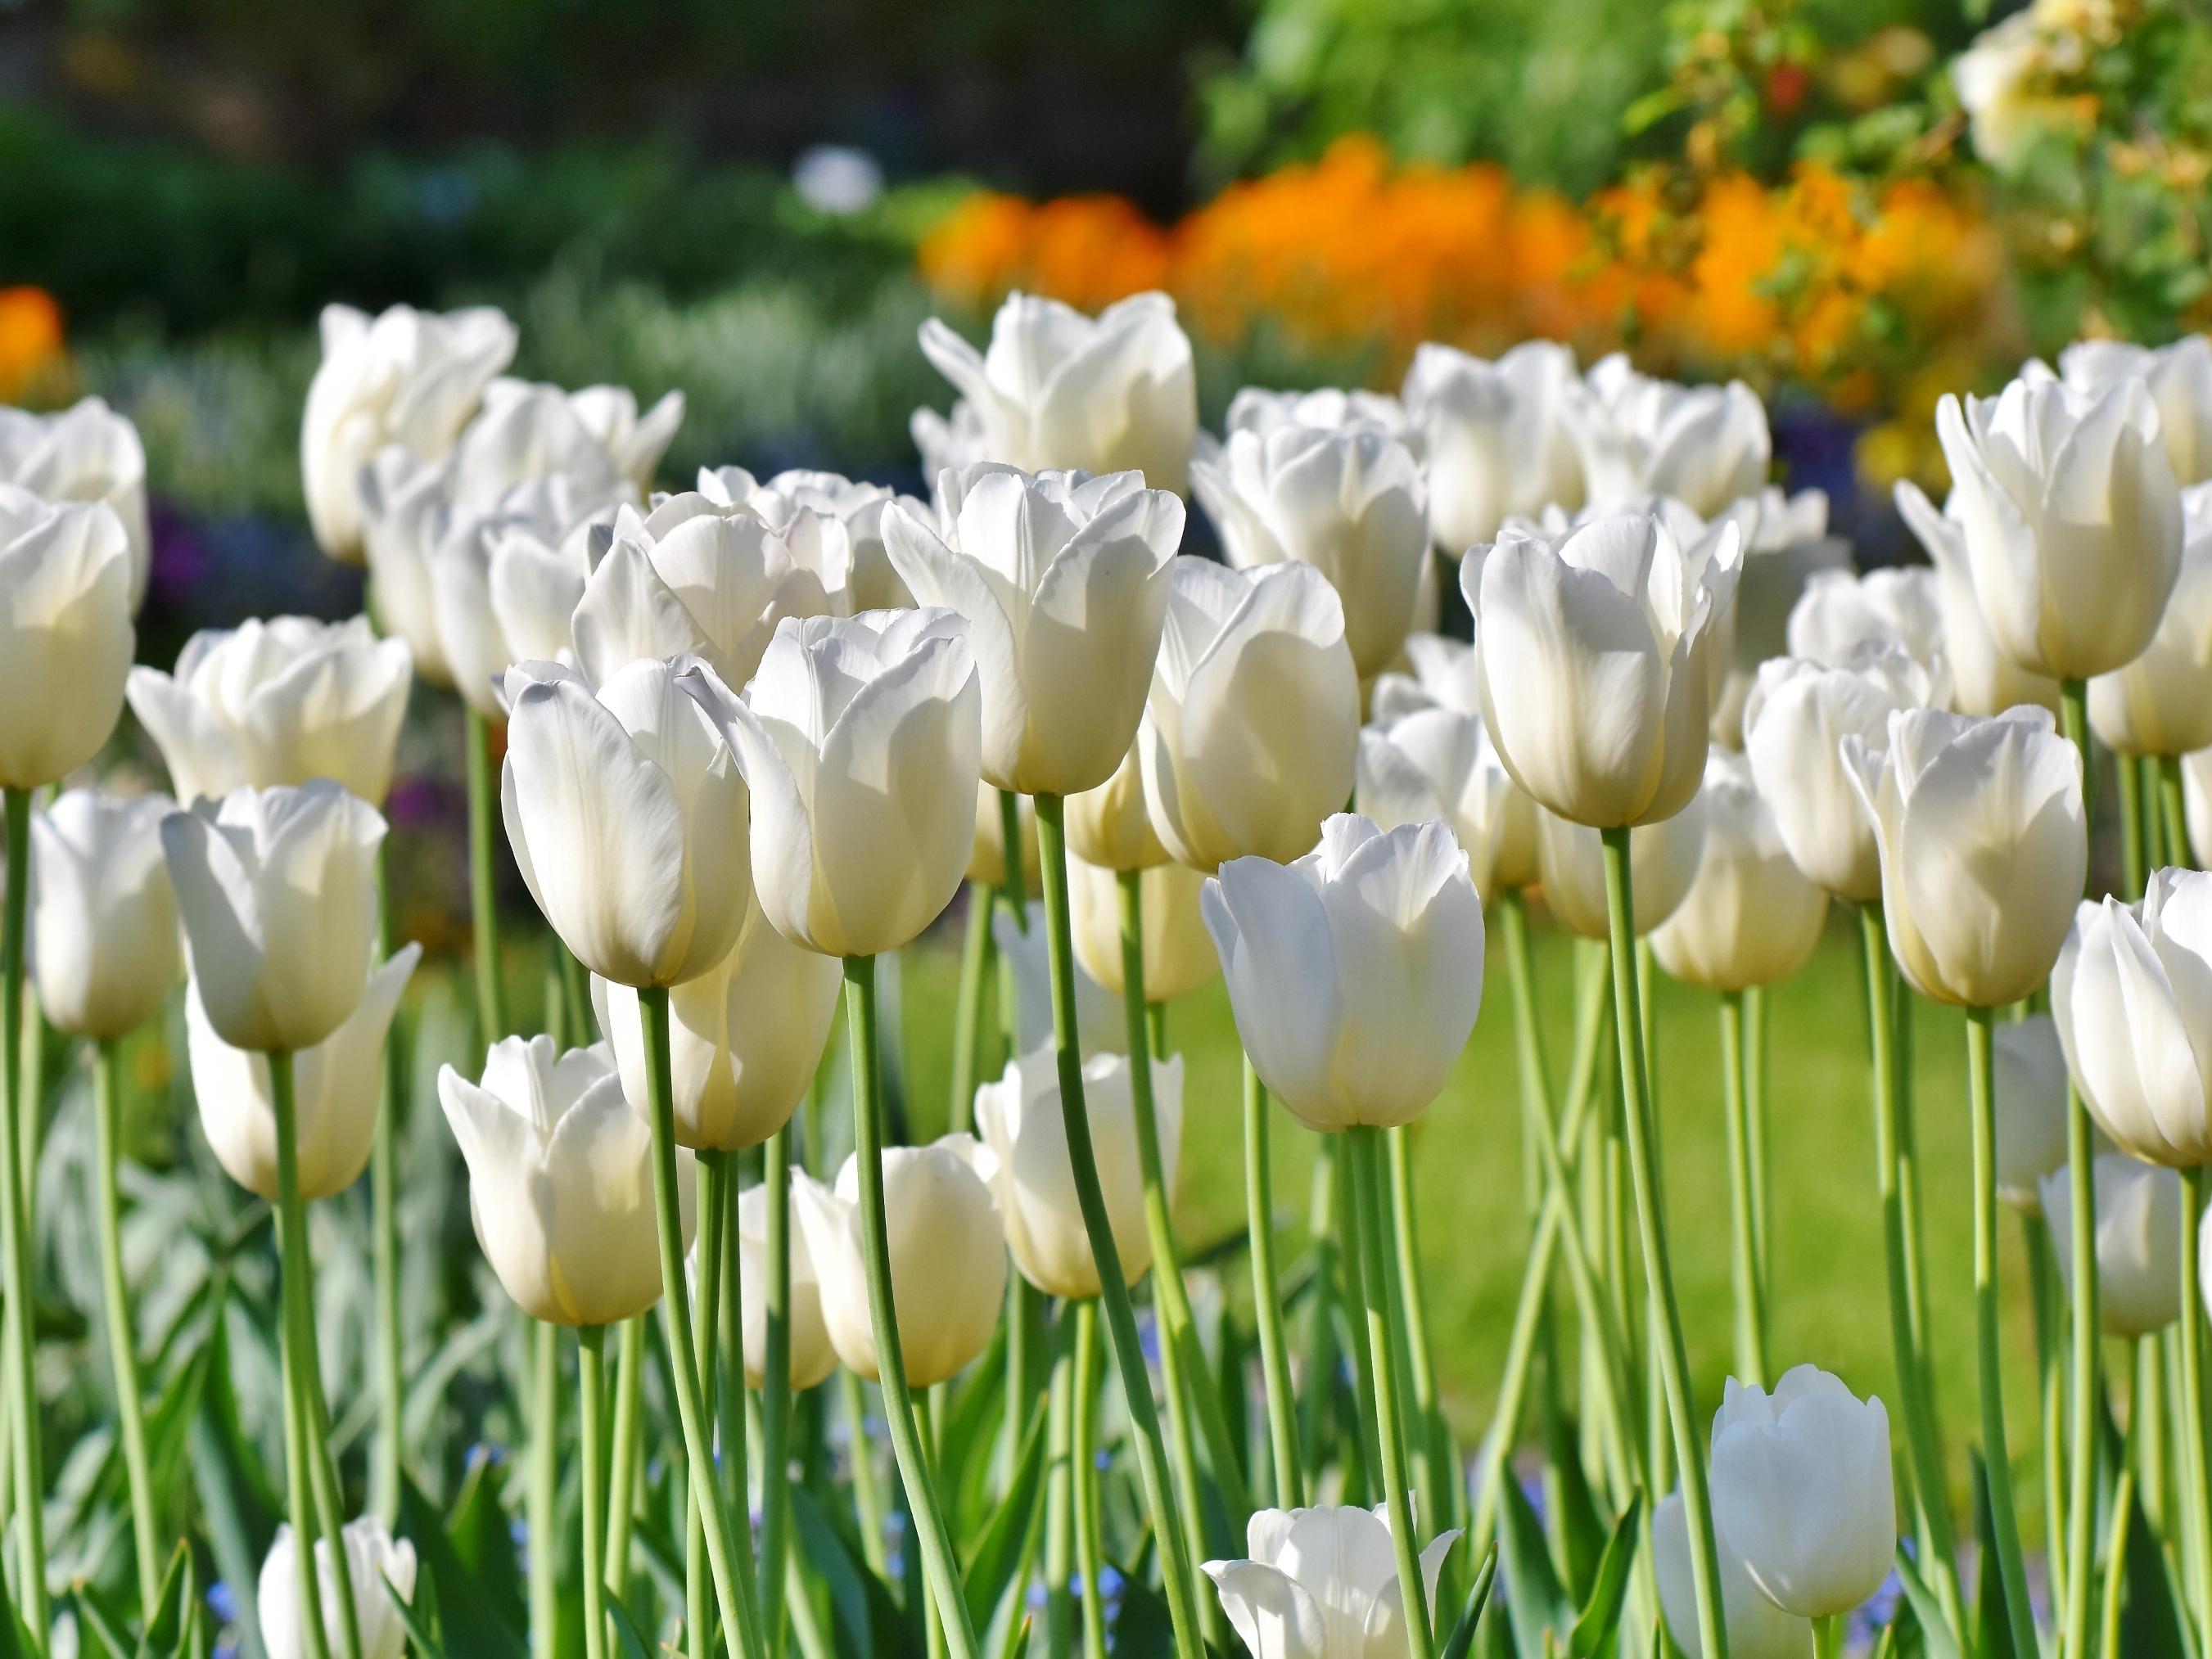 Tulip Triumph 'Jumbo White' - Tulip from Leo Berbee Bulb Company